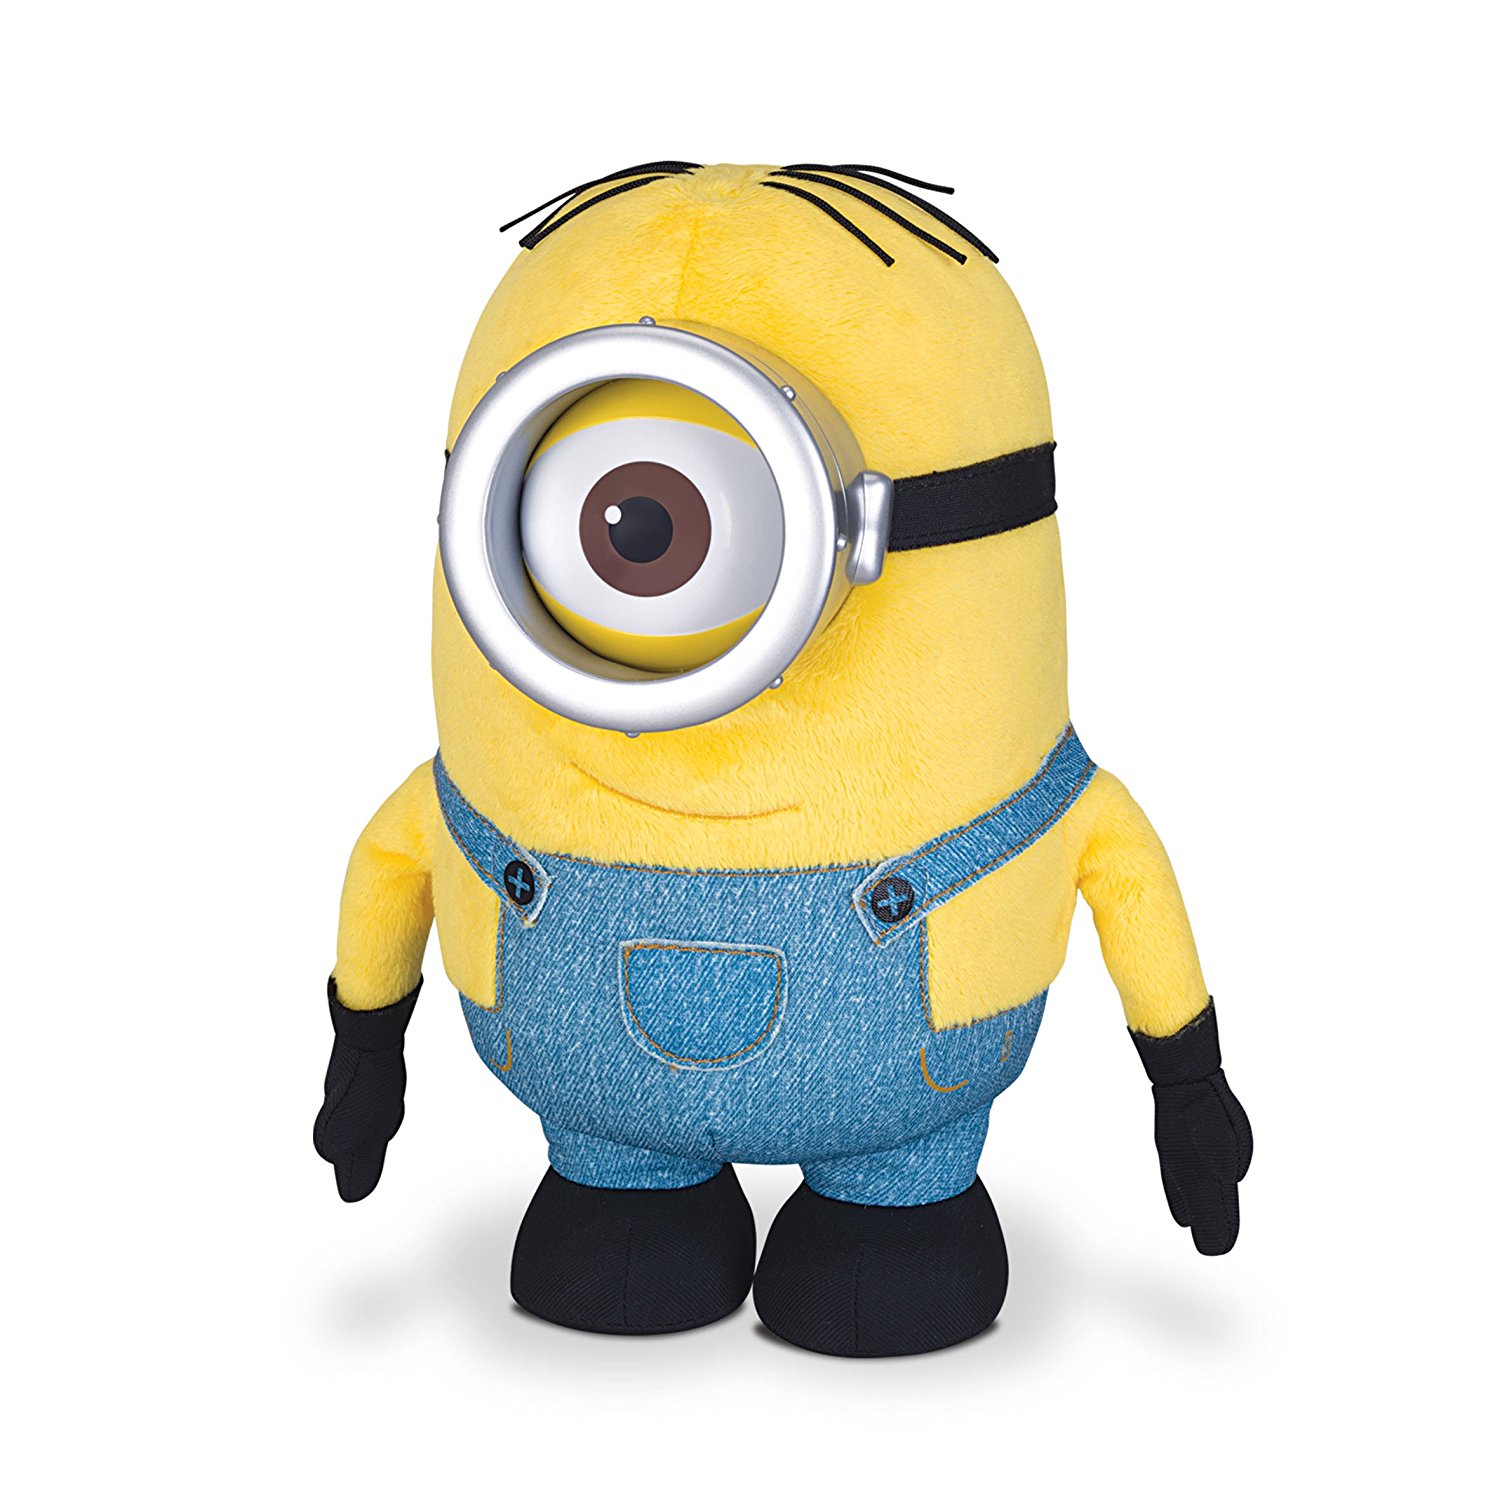 Amazon.com: Despicable Me Minions Huggable Plush - Stuart: Toys & Games